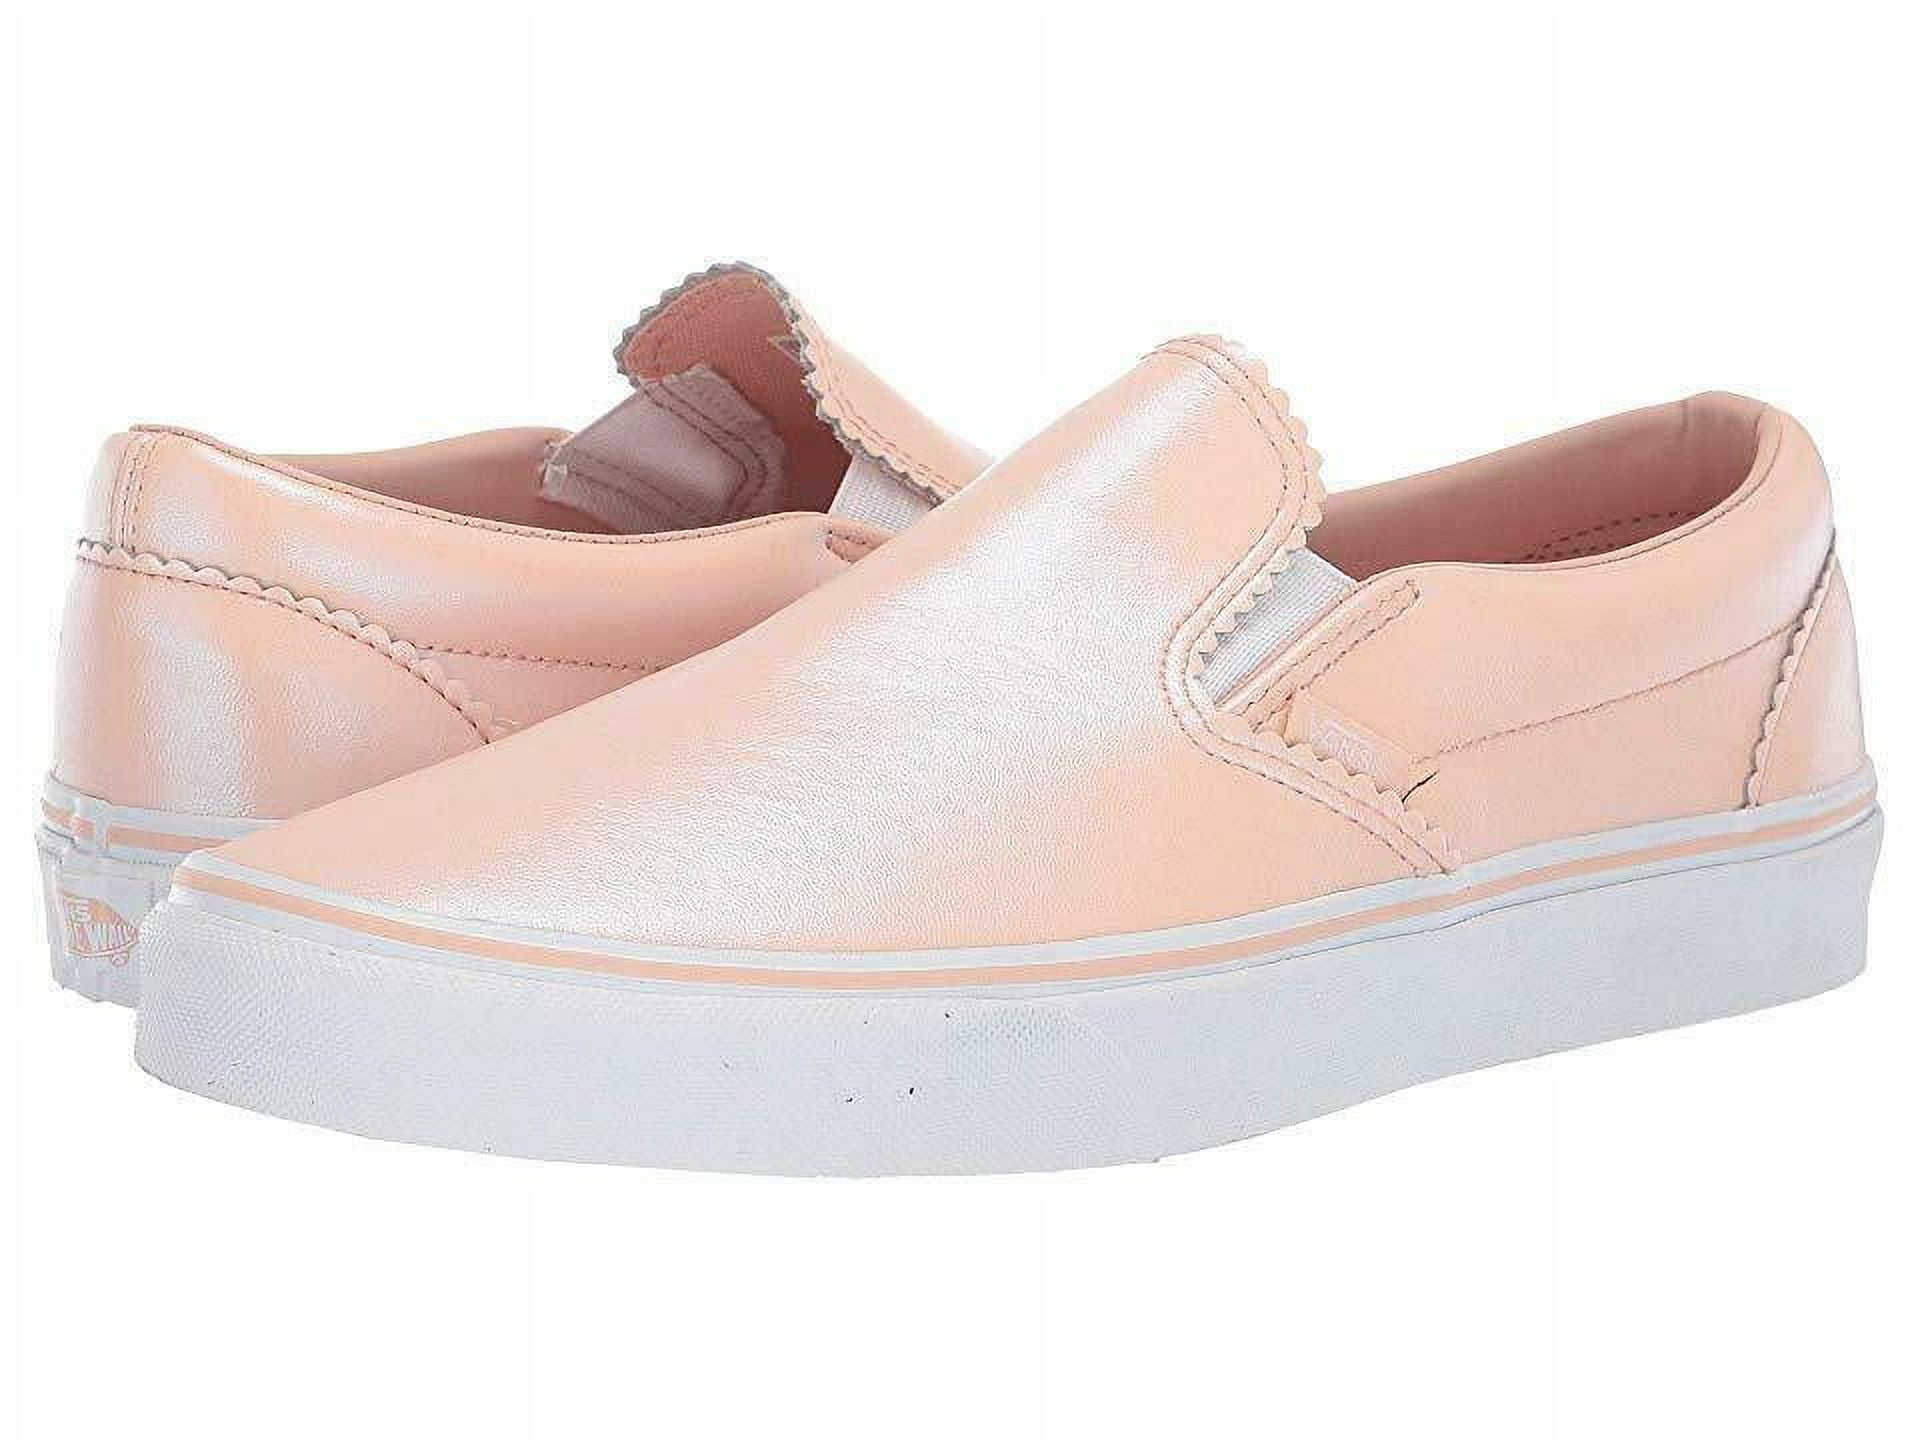 sladre craft Sudan Vans Classic Slip On Pearl Suede Spanish Villa Men's Skate Shoes Size 10 -  Walmart.com